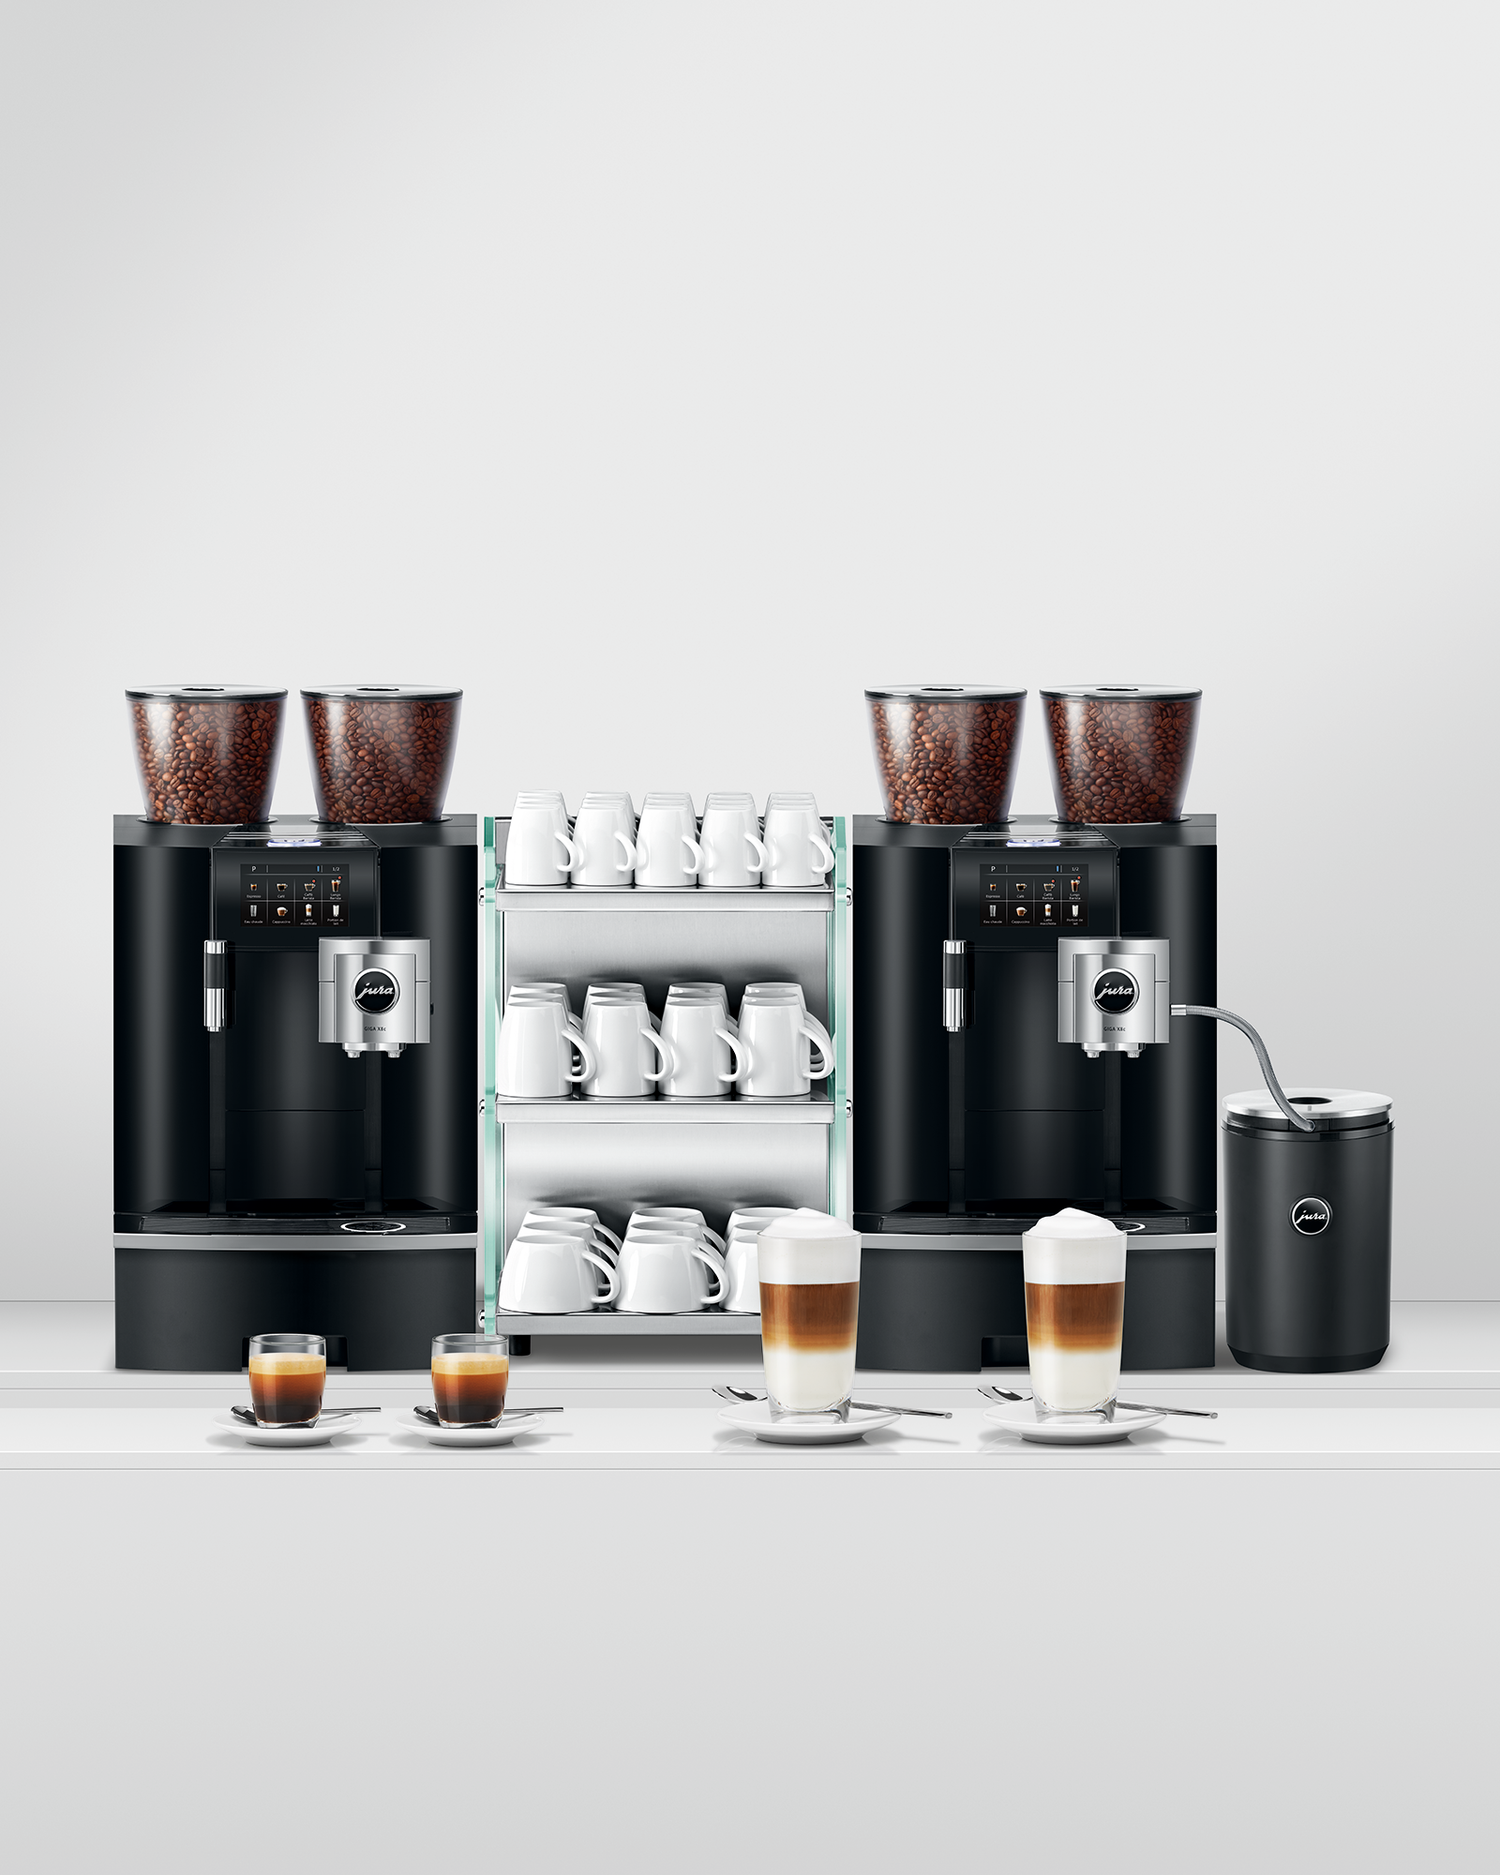 Édika - Machines espresso, café et accessoires – Les Importations Édika Inc.